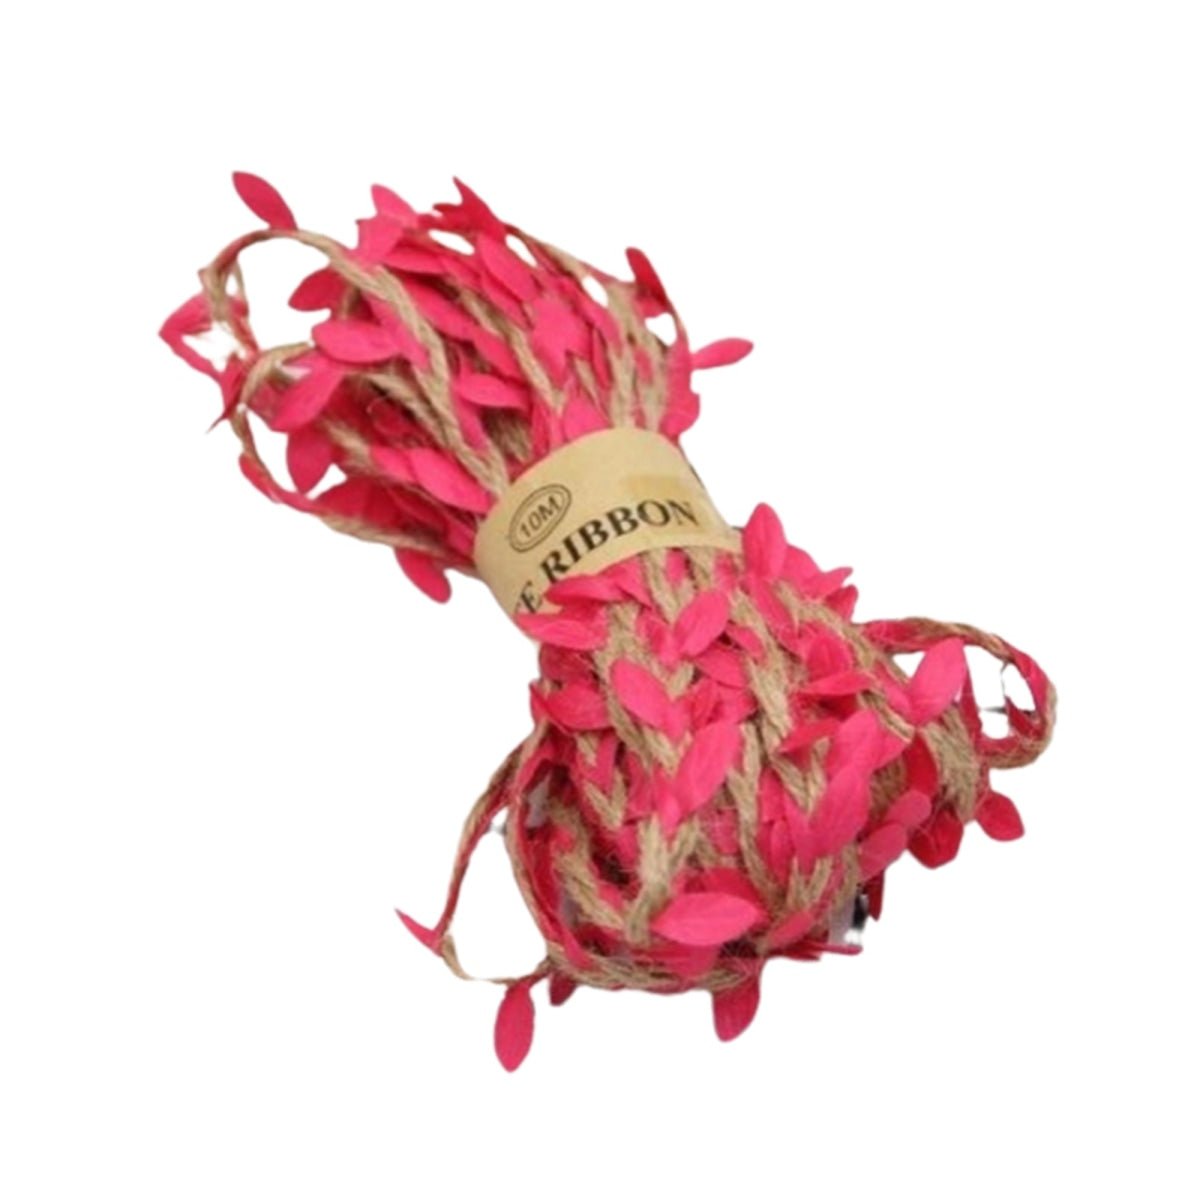 10m Artificial Vine Green Leaf Hessian Jute Twine Rope Vine Burlap Wedding Decoration Craft - Bright Pink - Asia Sell